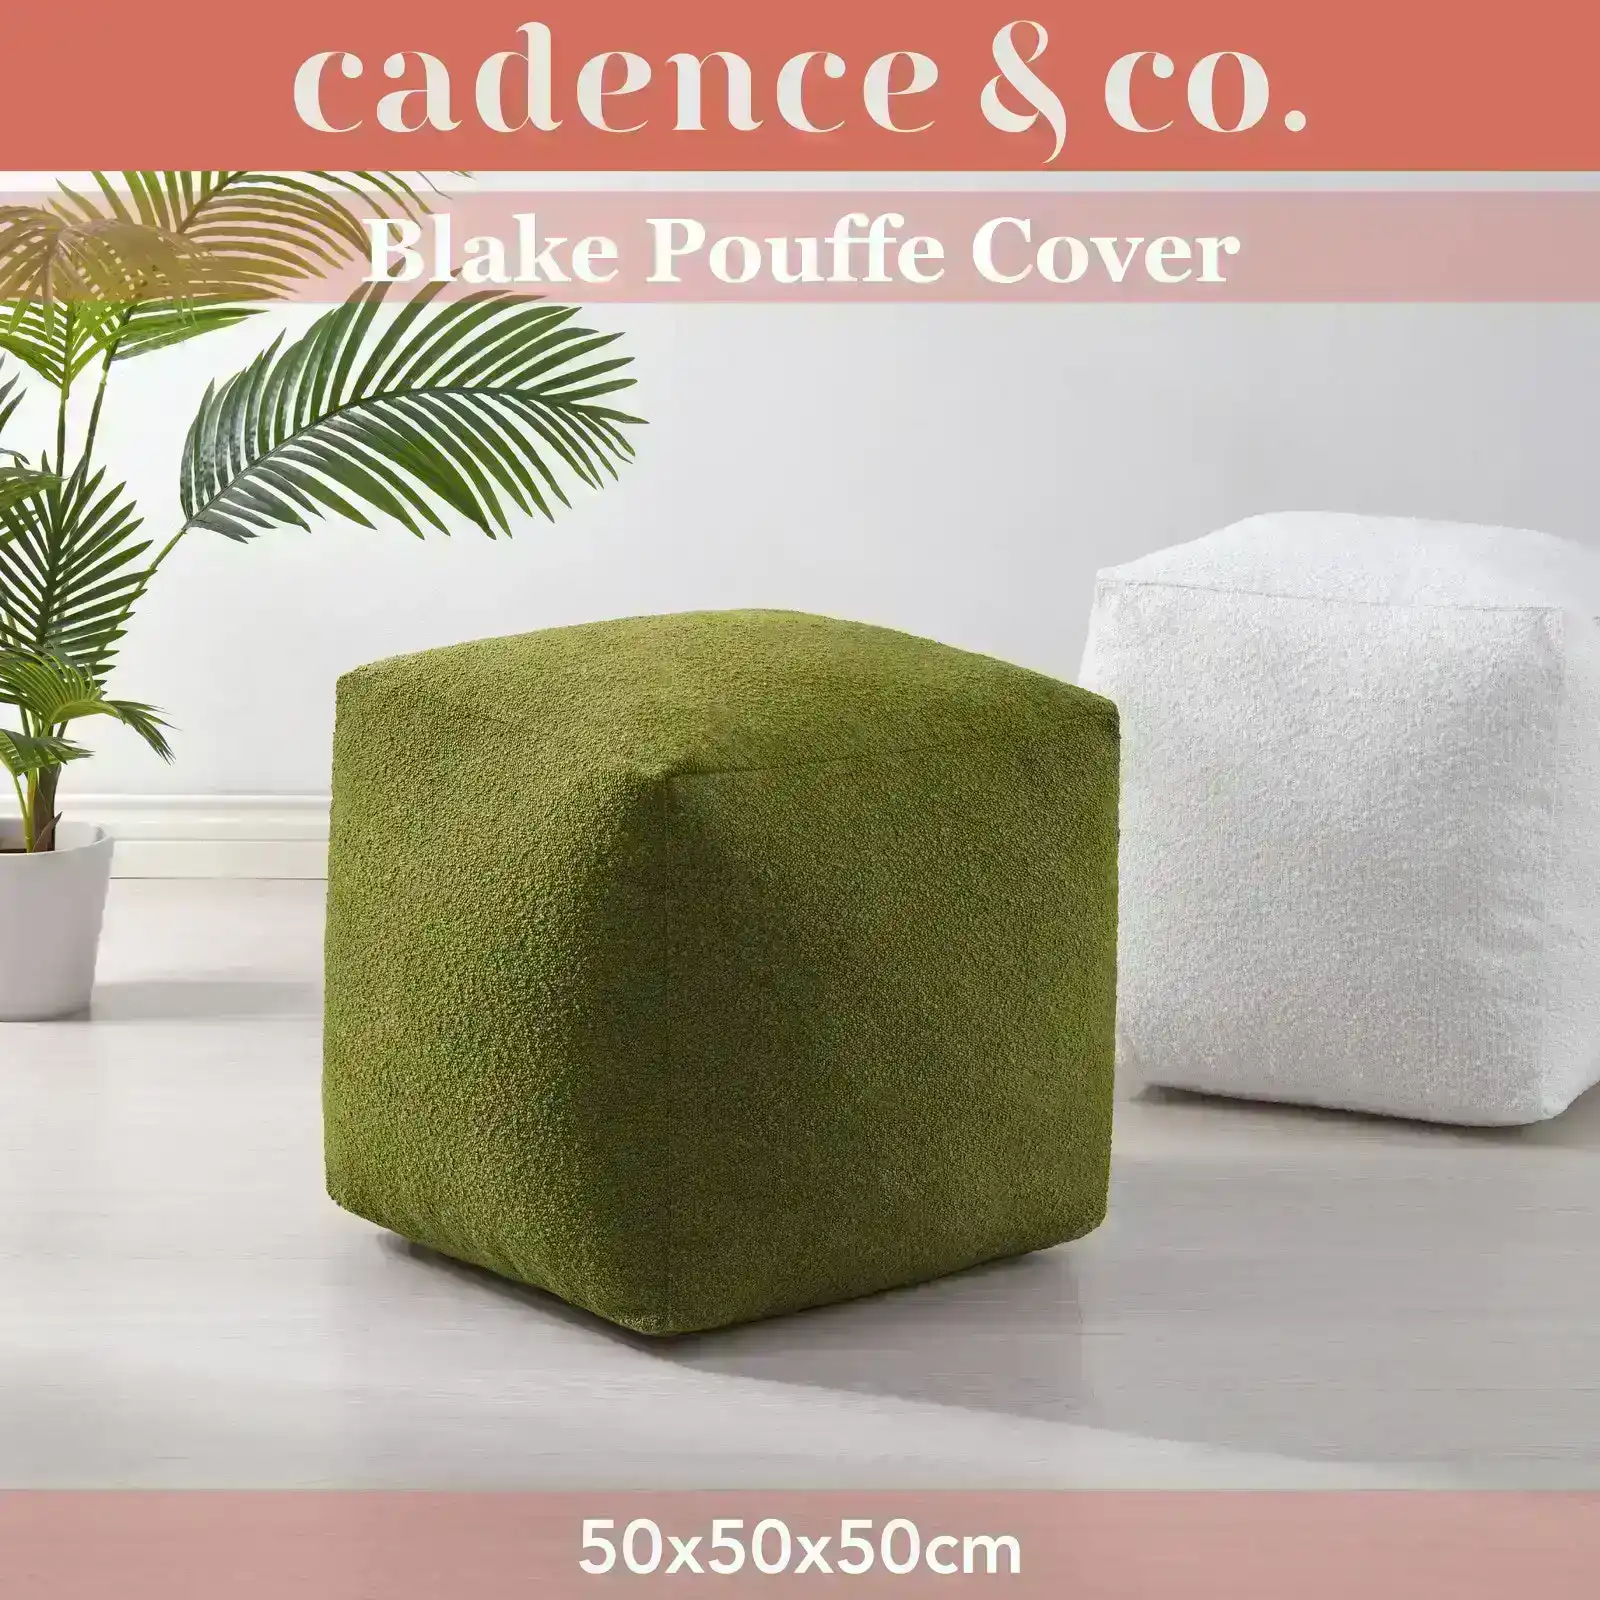 Cadence & Co. Blake Boucle Pouffe Cover Moss Green 50x50x50cm